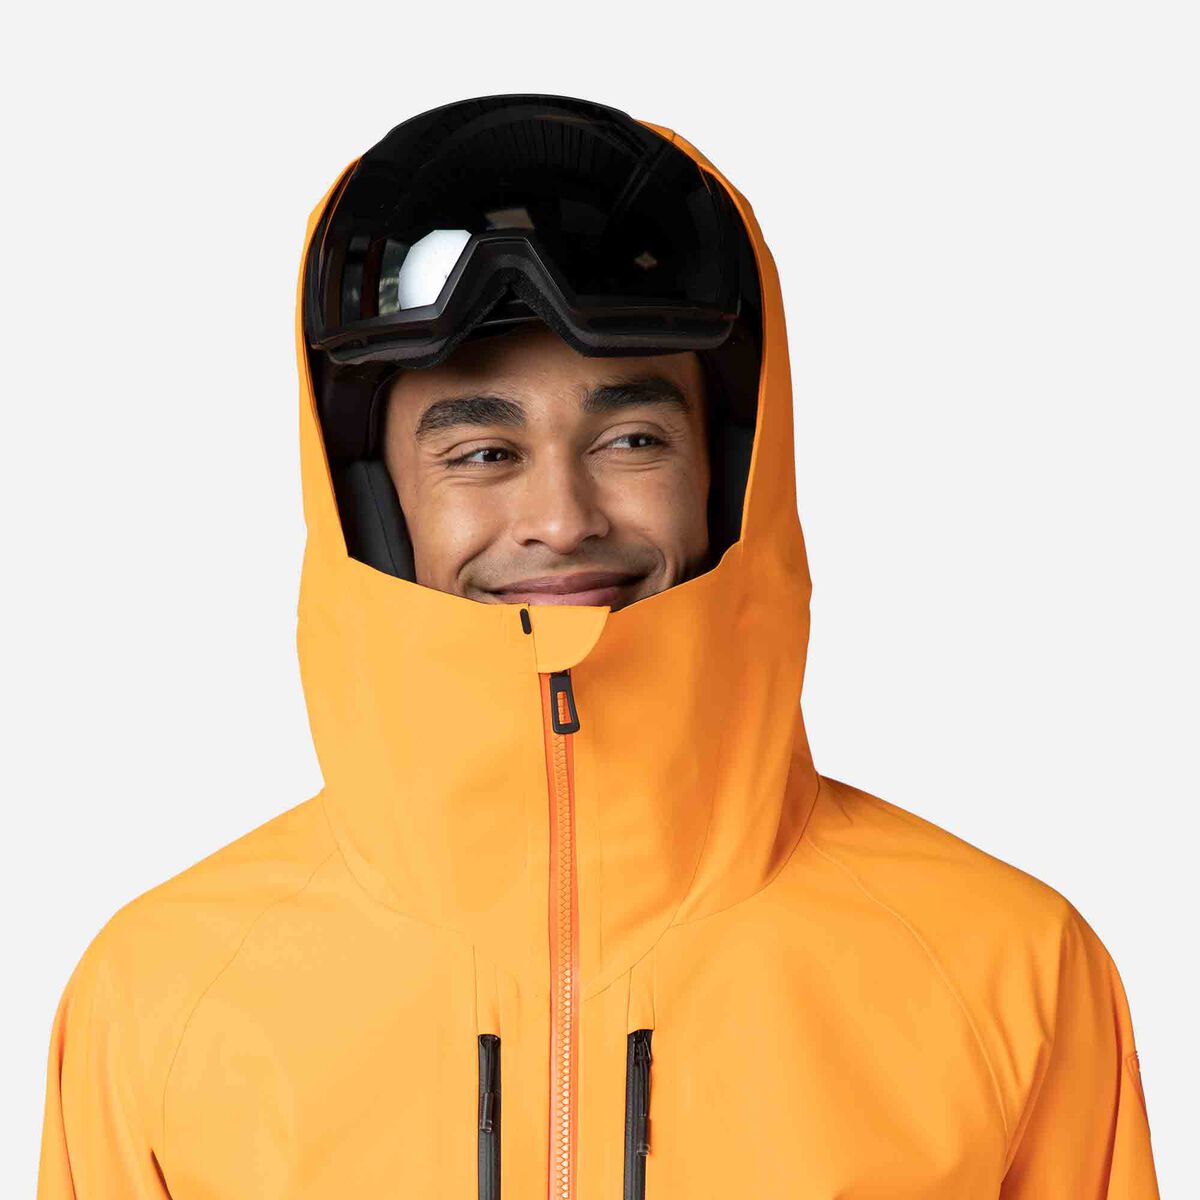 Men's Evader Ski Jacket | Ski & snowboard jackets | Rossignol